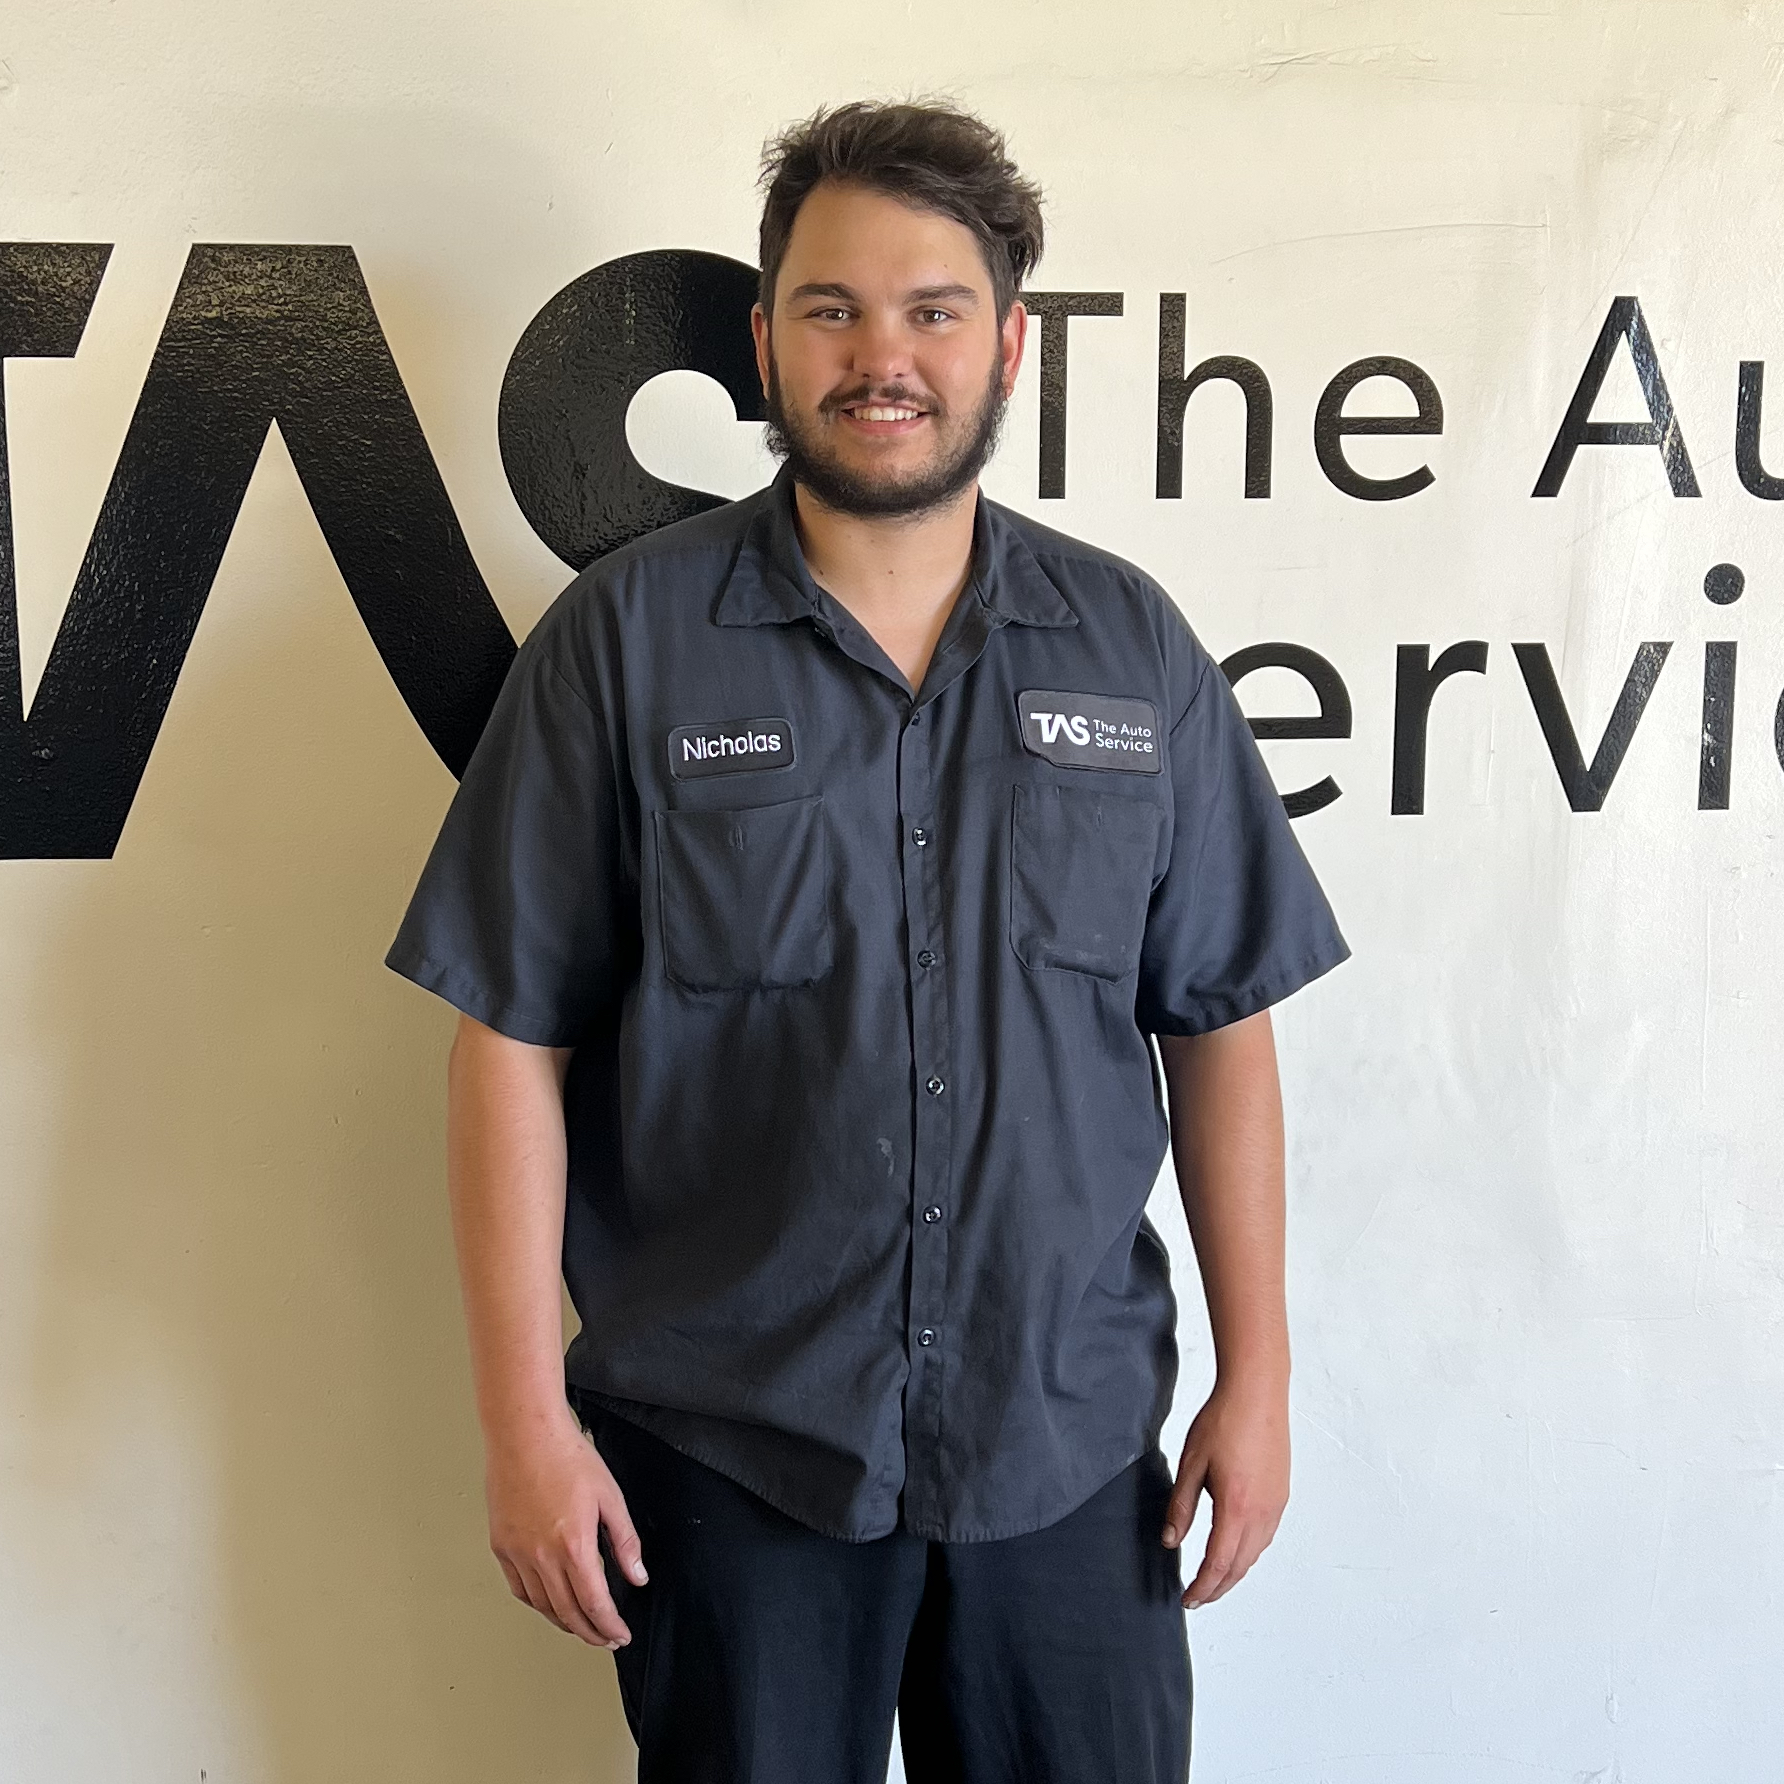 Nicholas Martinez - The Auto Service